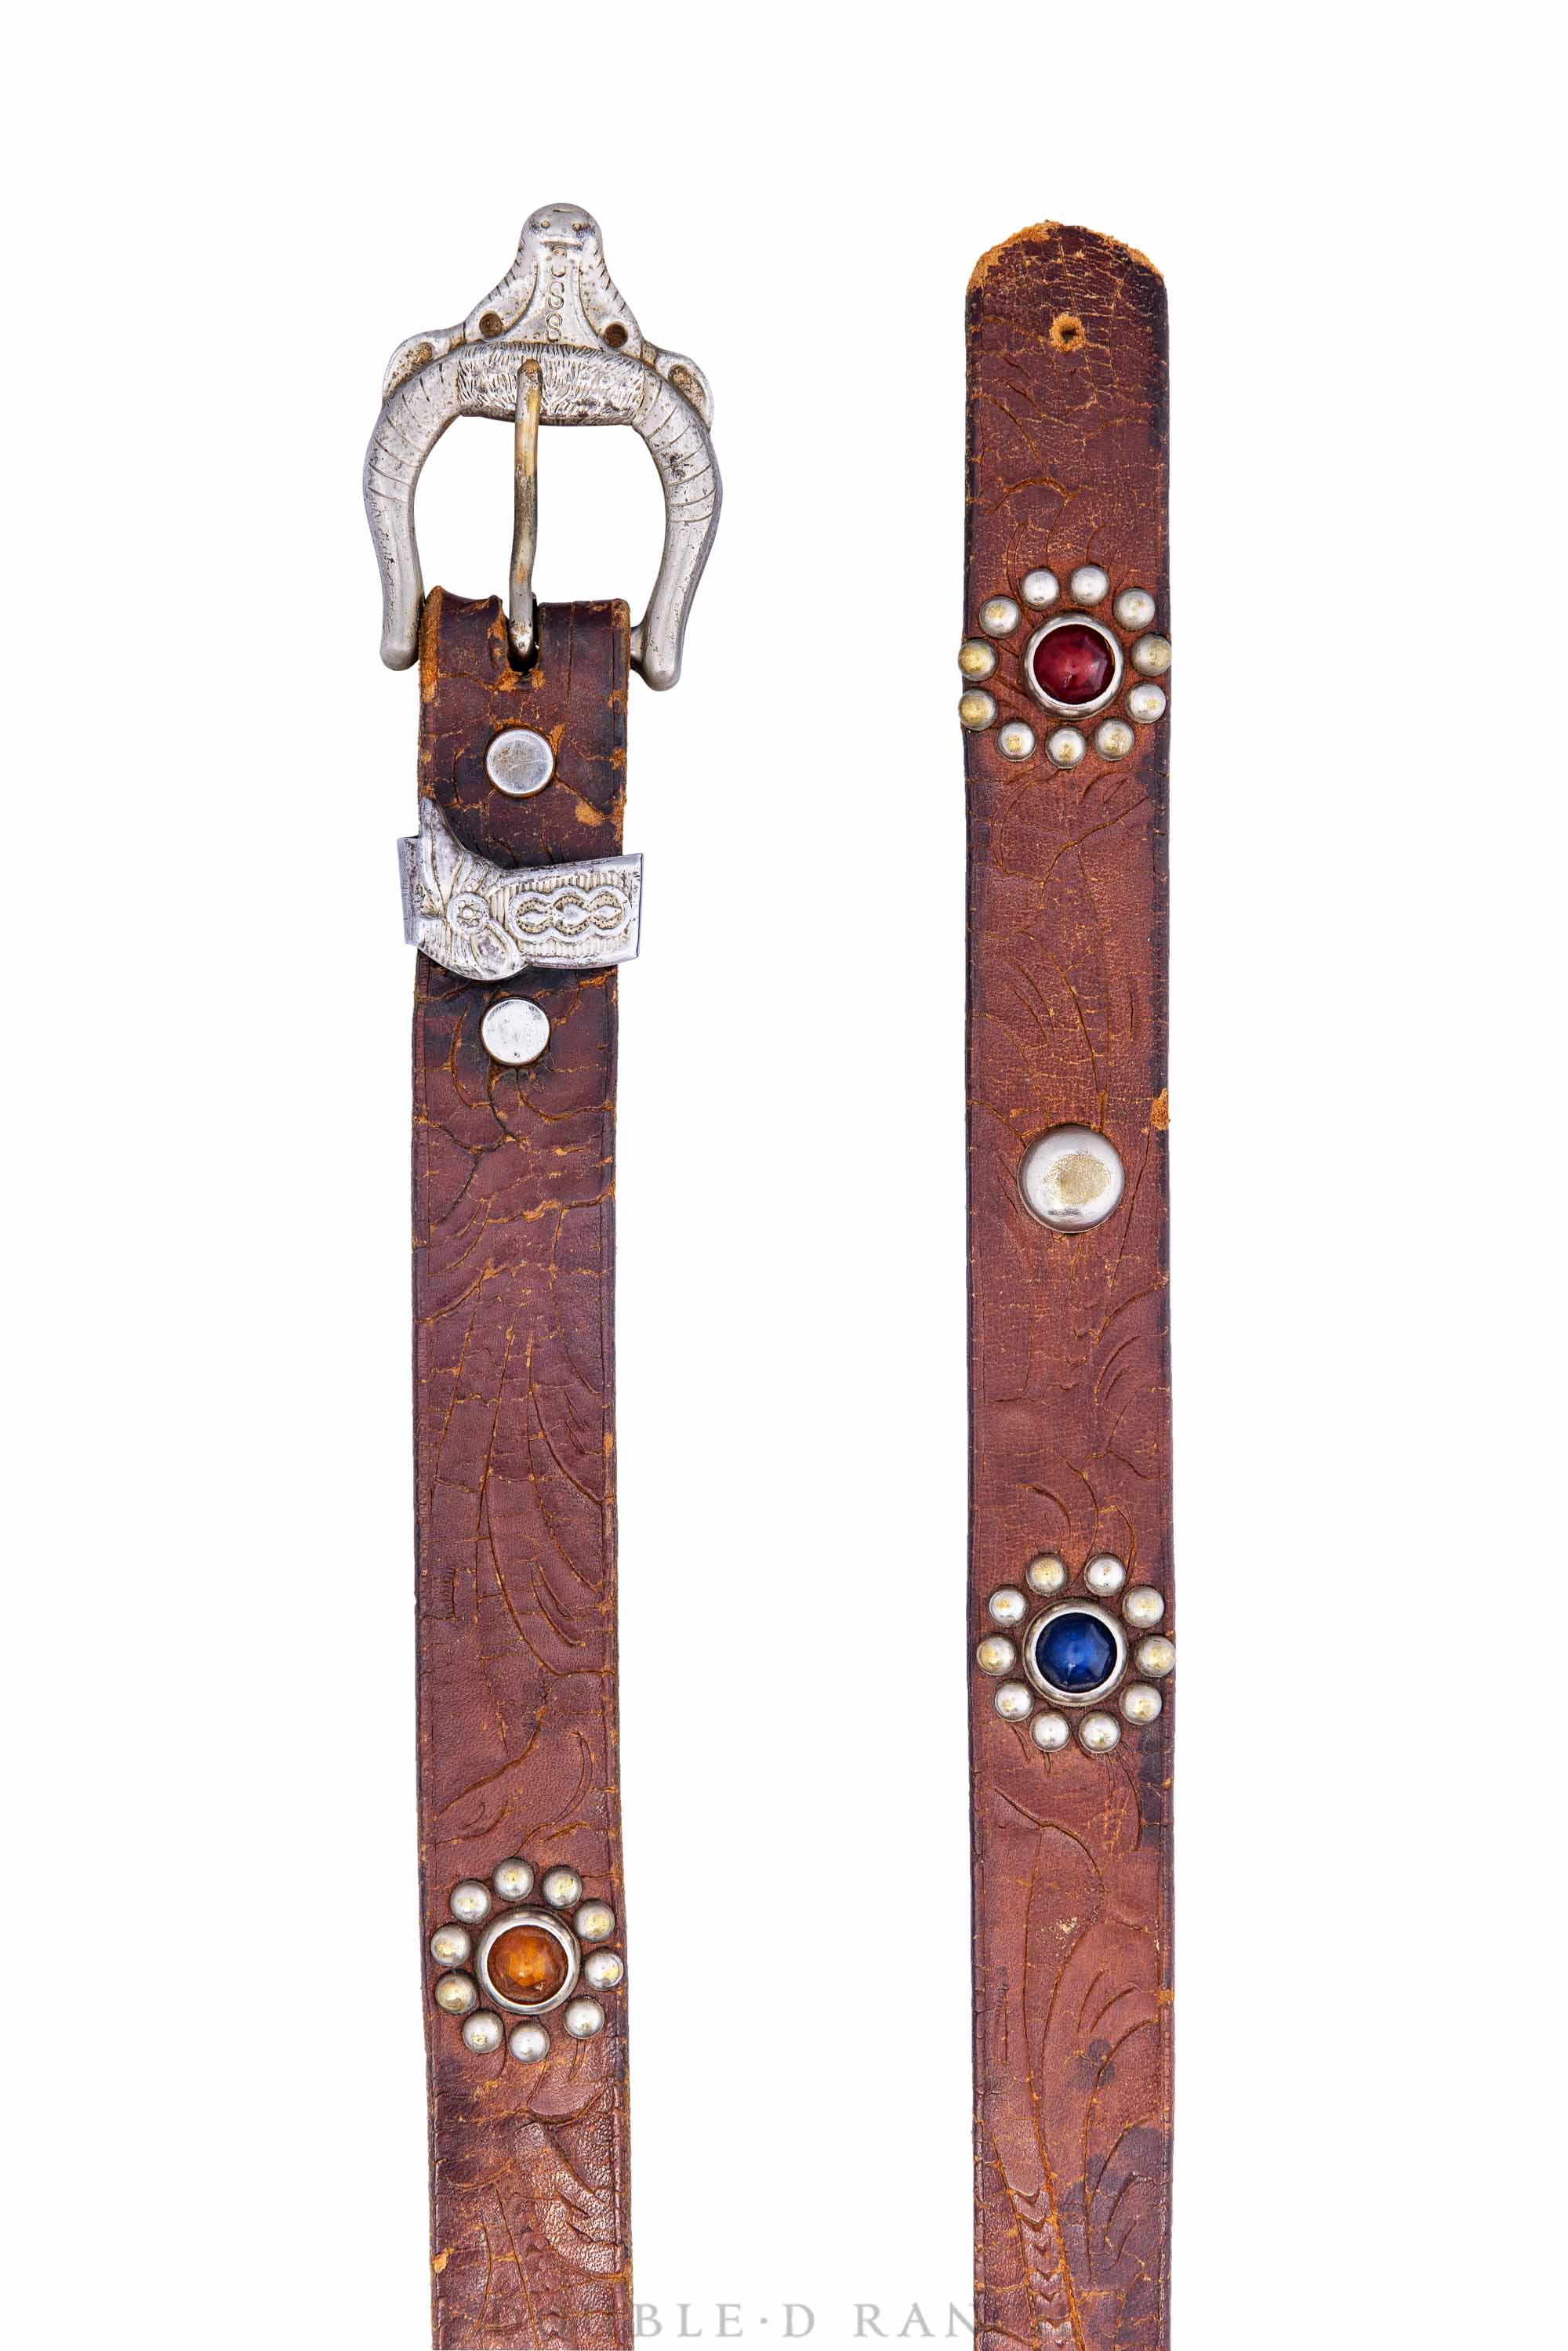 Vintage Western Studded Belt – Leatherock